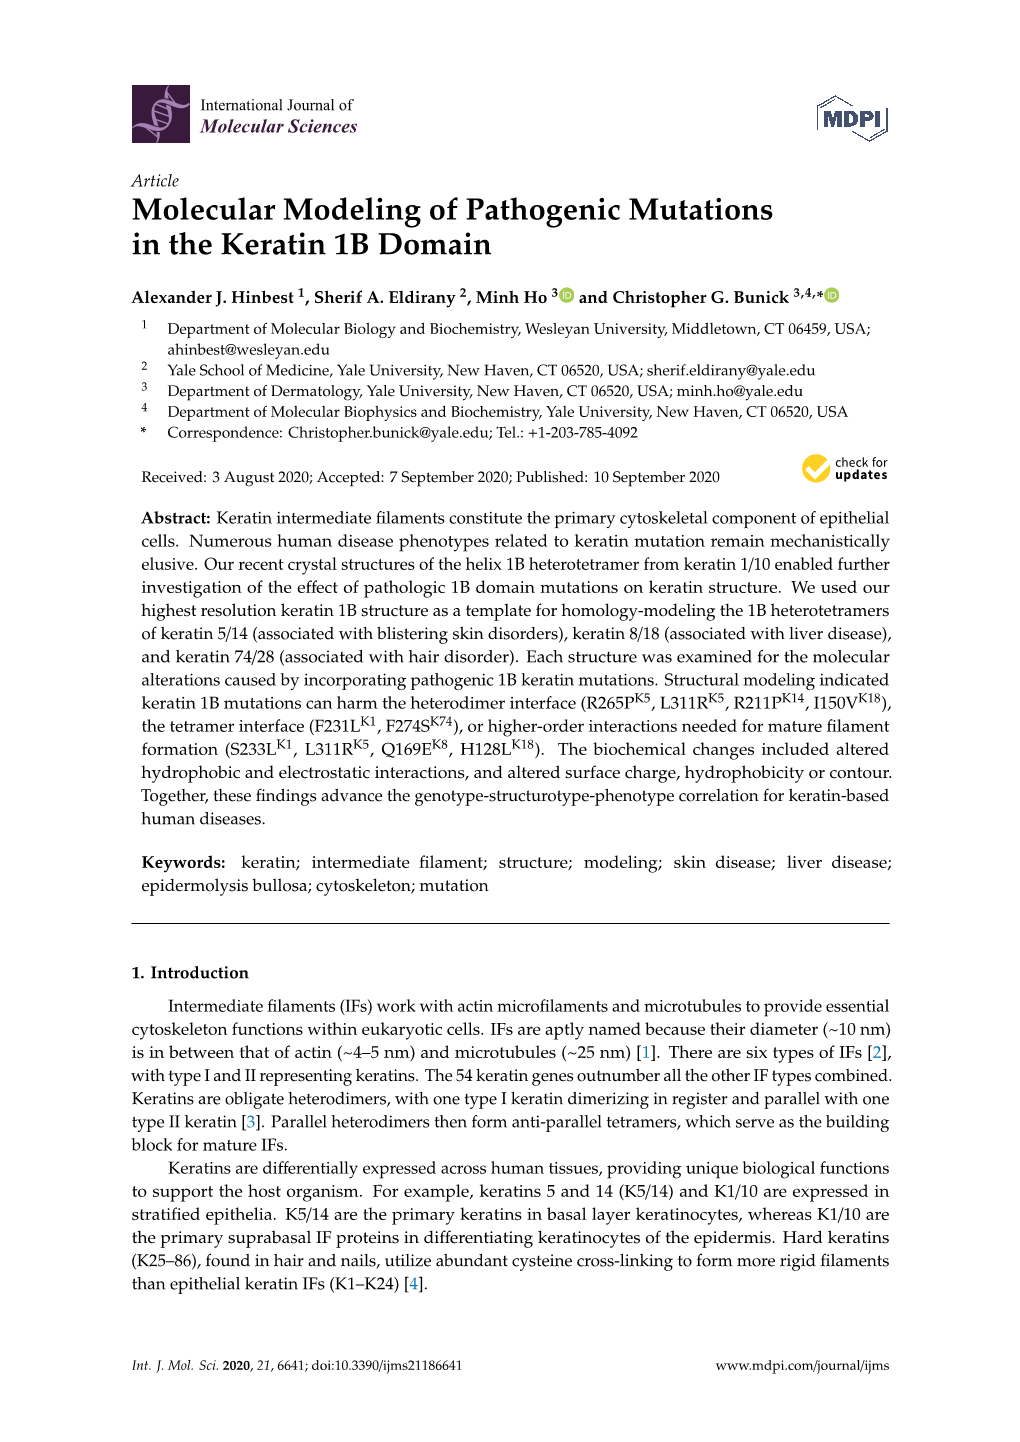 Molecular Modeling of Pathogenic Mutations in the Keratin 1B Domain